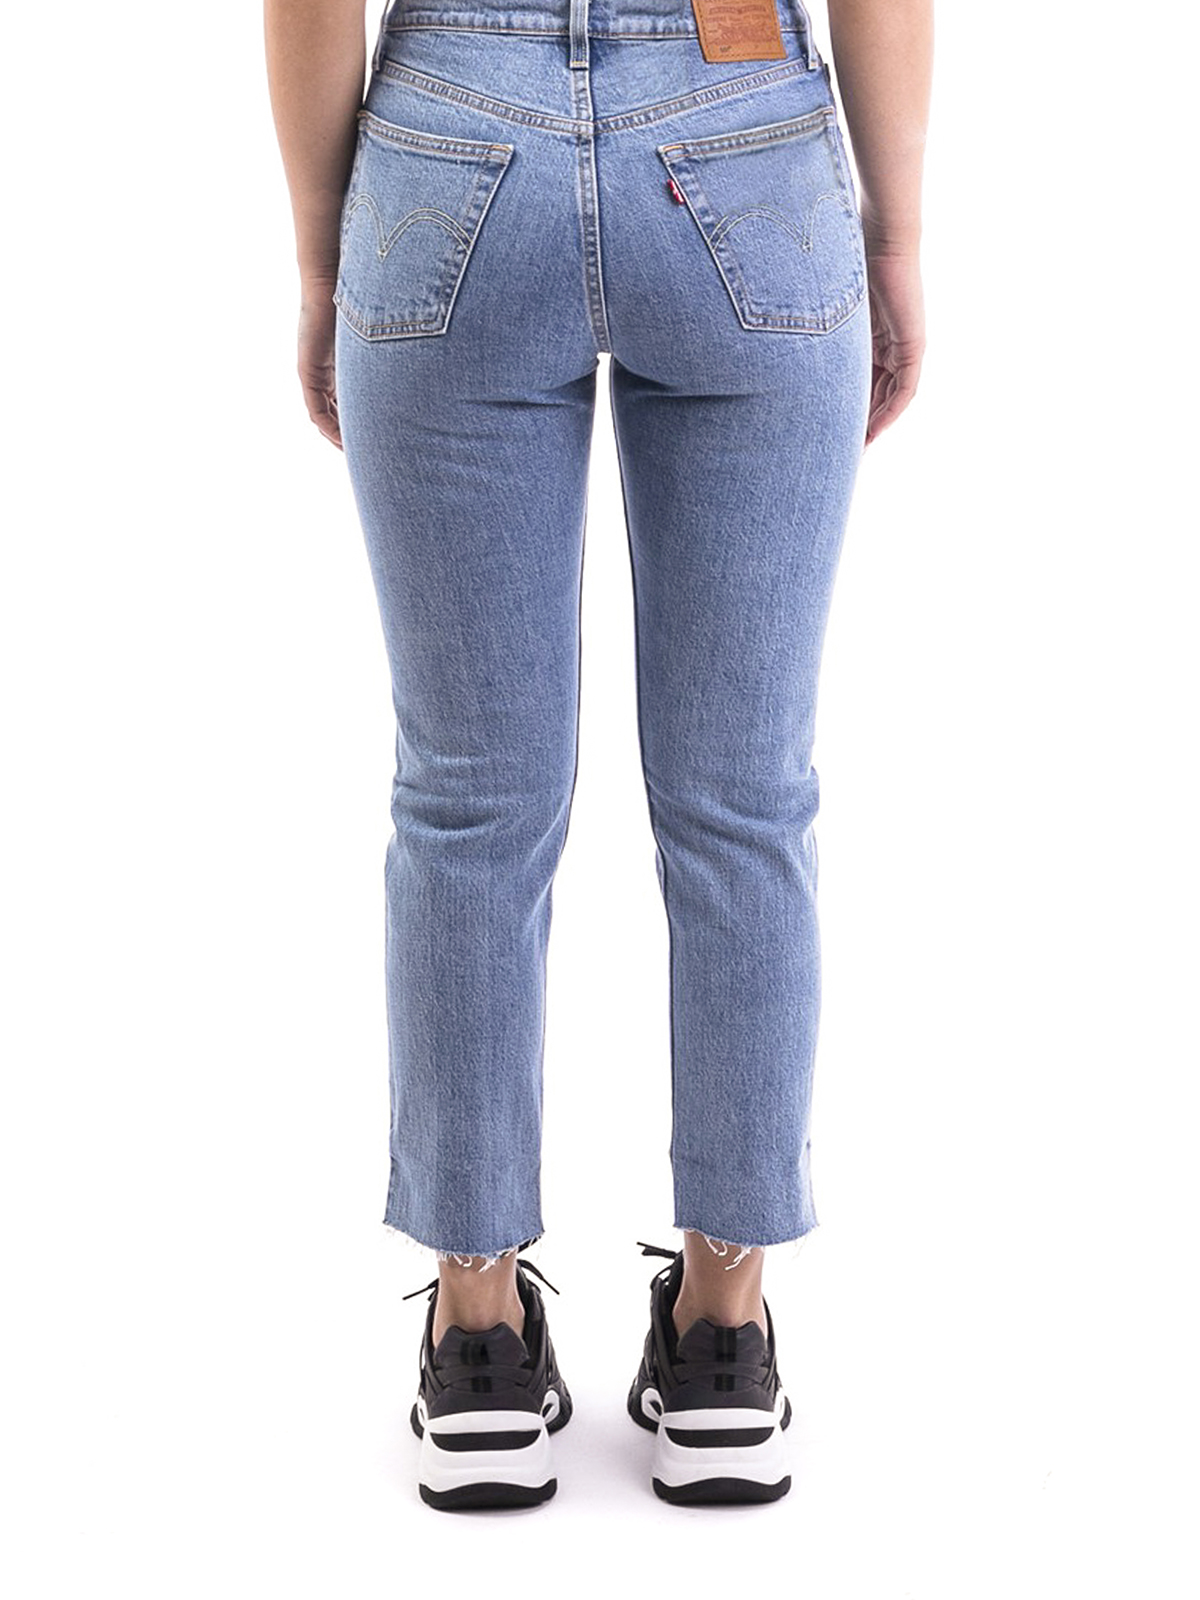 levi's 501 original cropped jeans